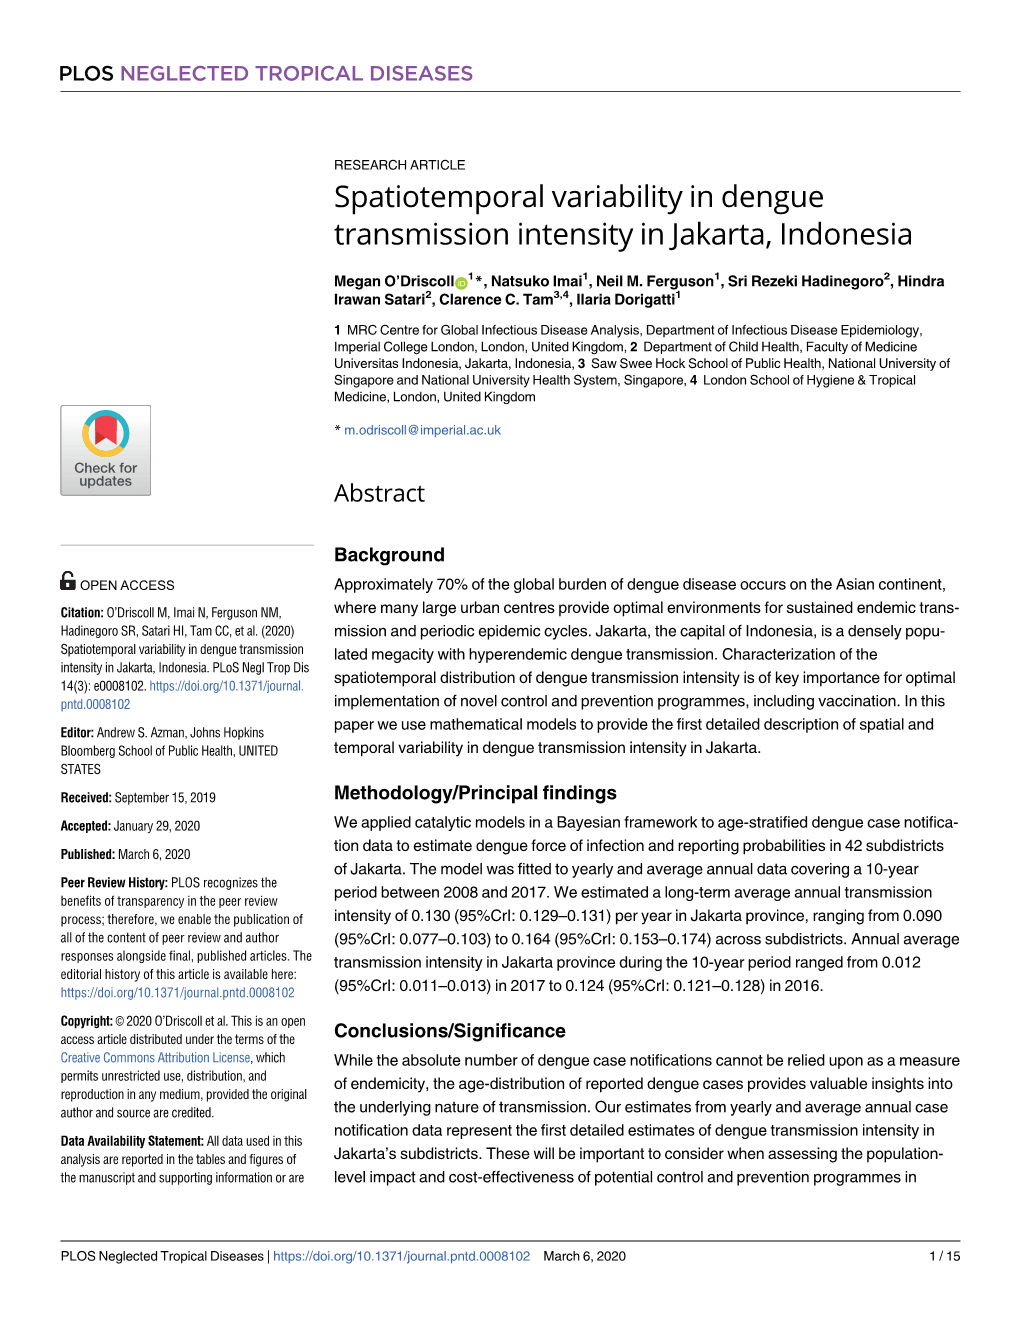 Spatiotemporal Variability in Dengue Transmission Intensity in Jakarta, Indonesia